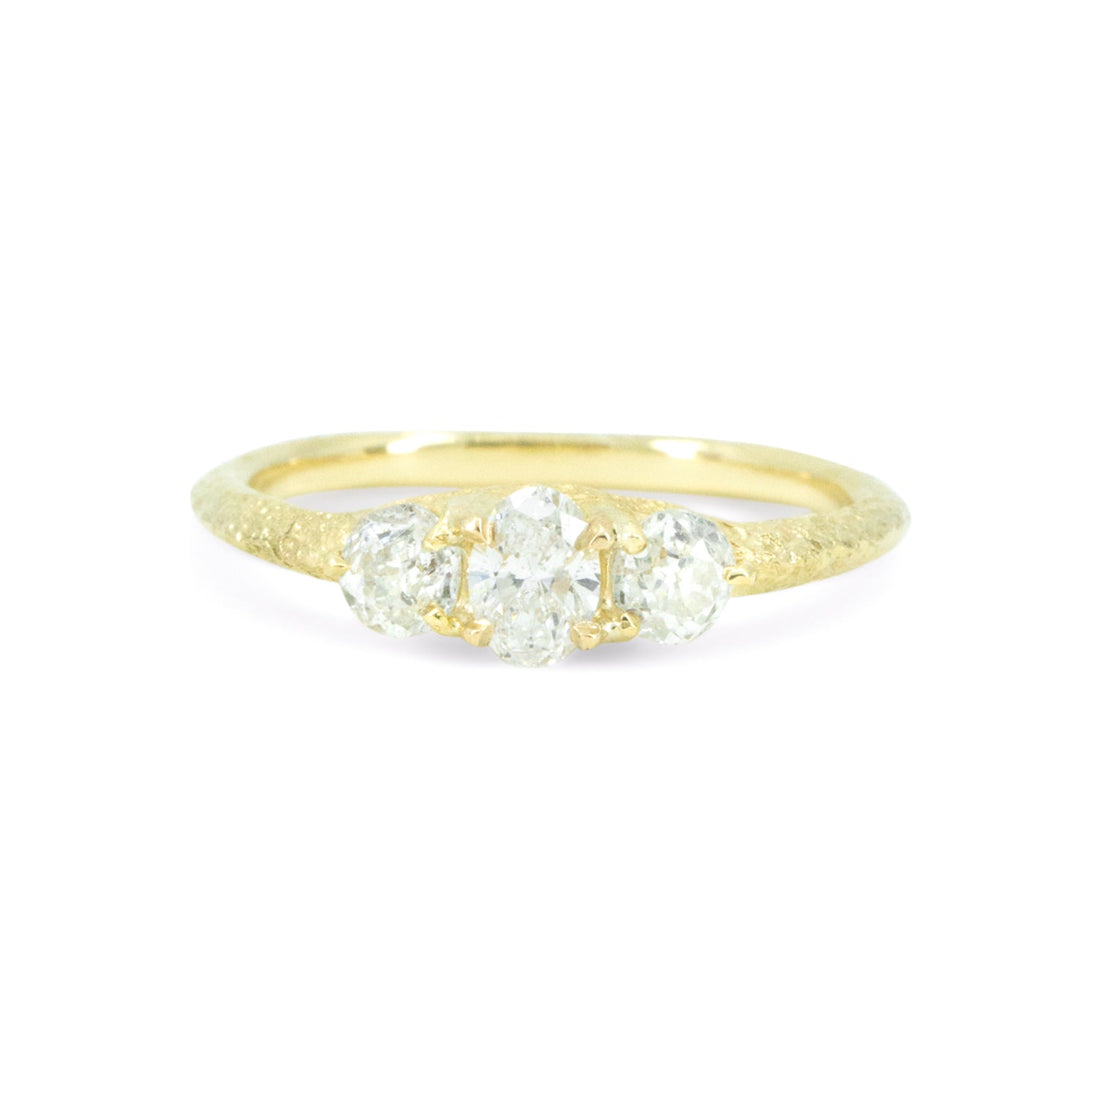 Oval Diamond Trio ring in 18k yellow gold by Erin Cuff Jewelry.